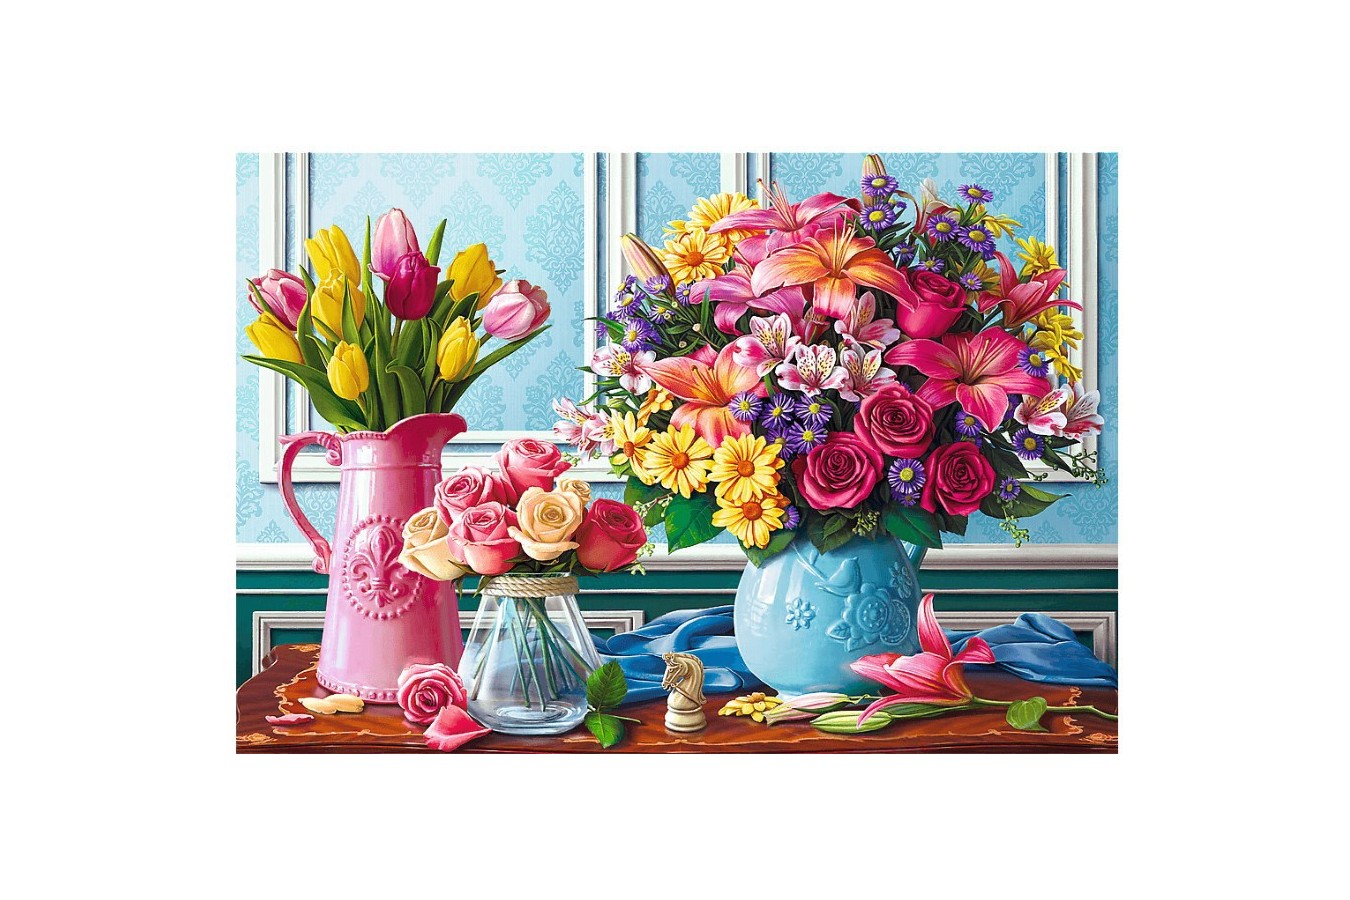 Puzzle Trefl - Flowers, 1500 piese (26157)